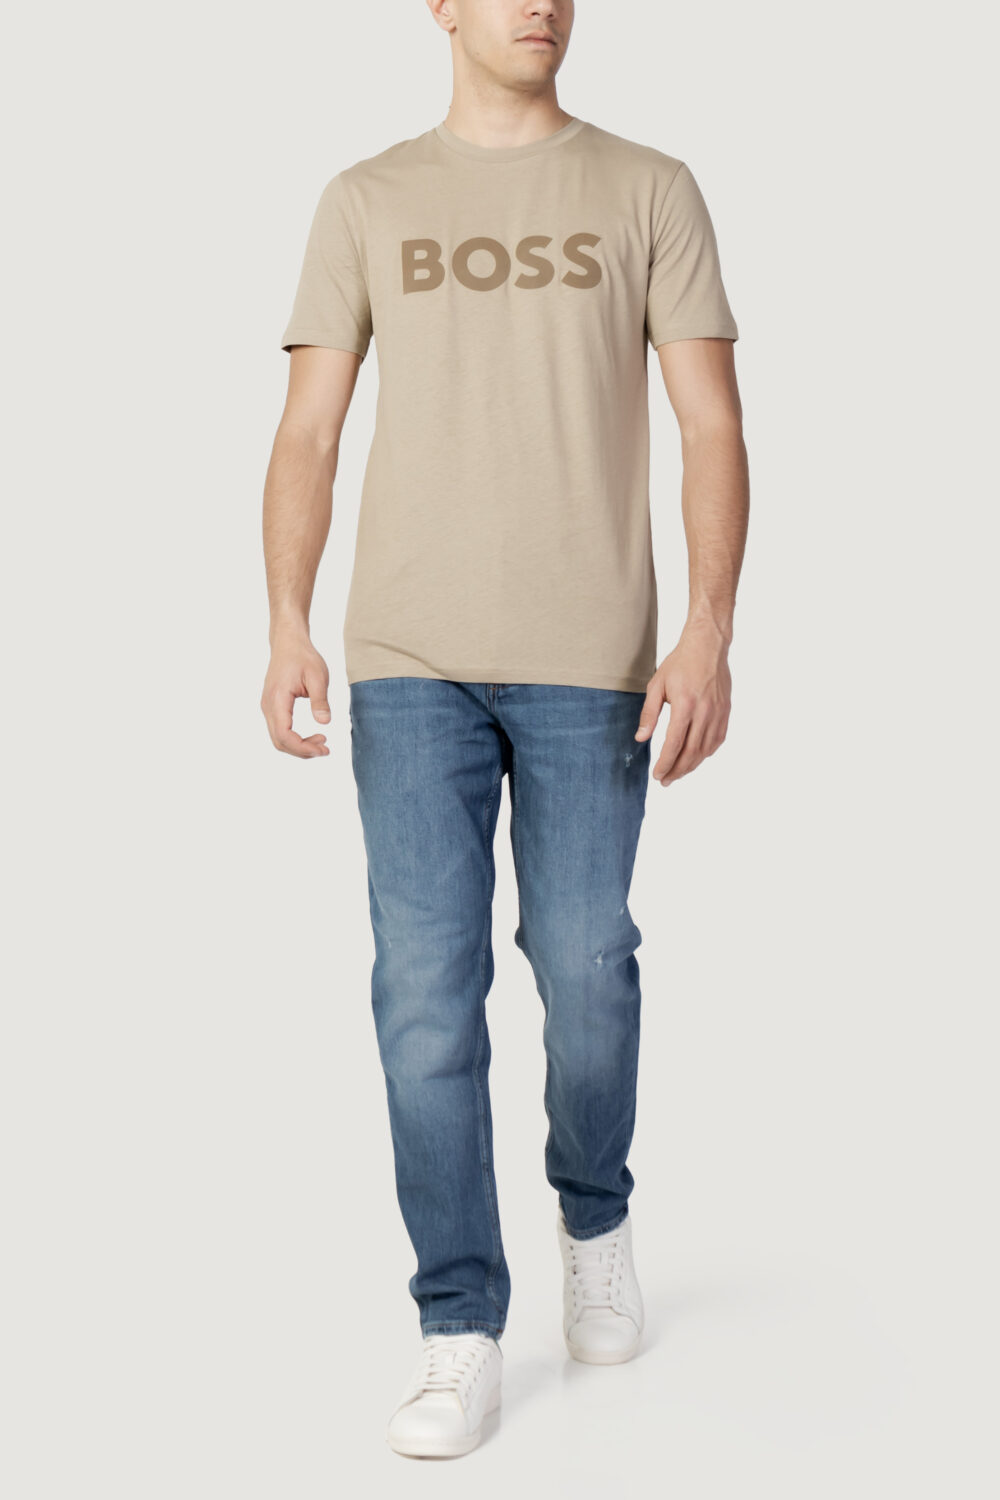 T-shirt Boss jersey thinking 1 Beige scuro - Foto 4